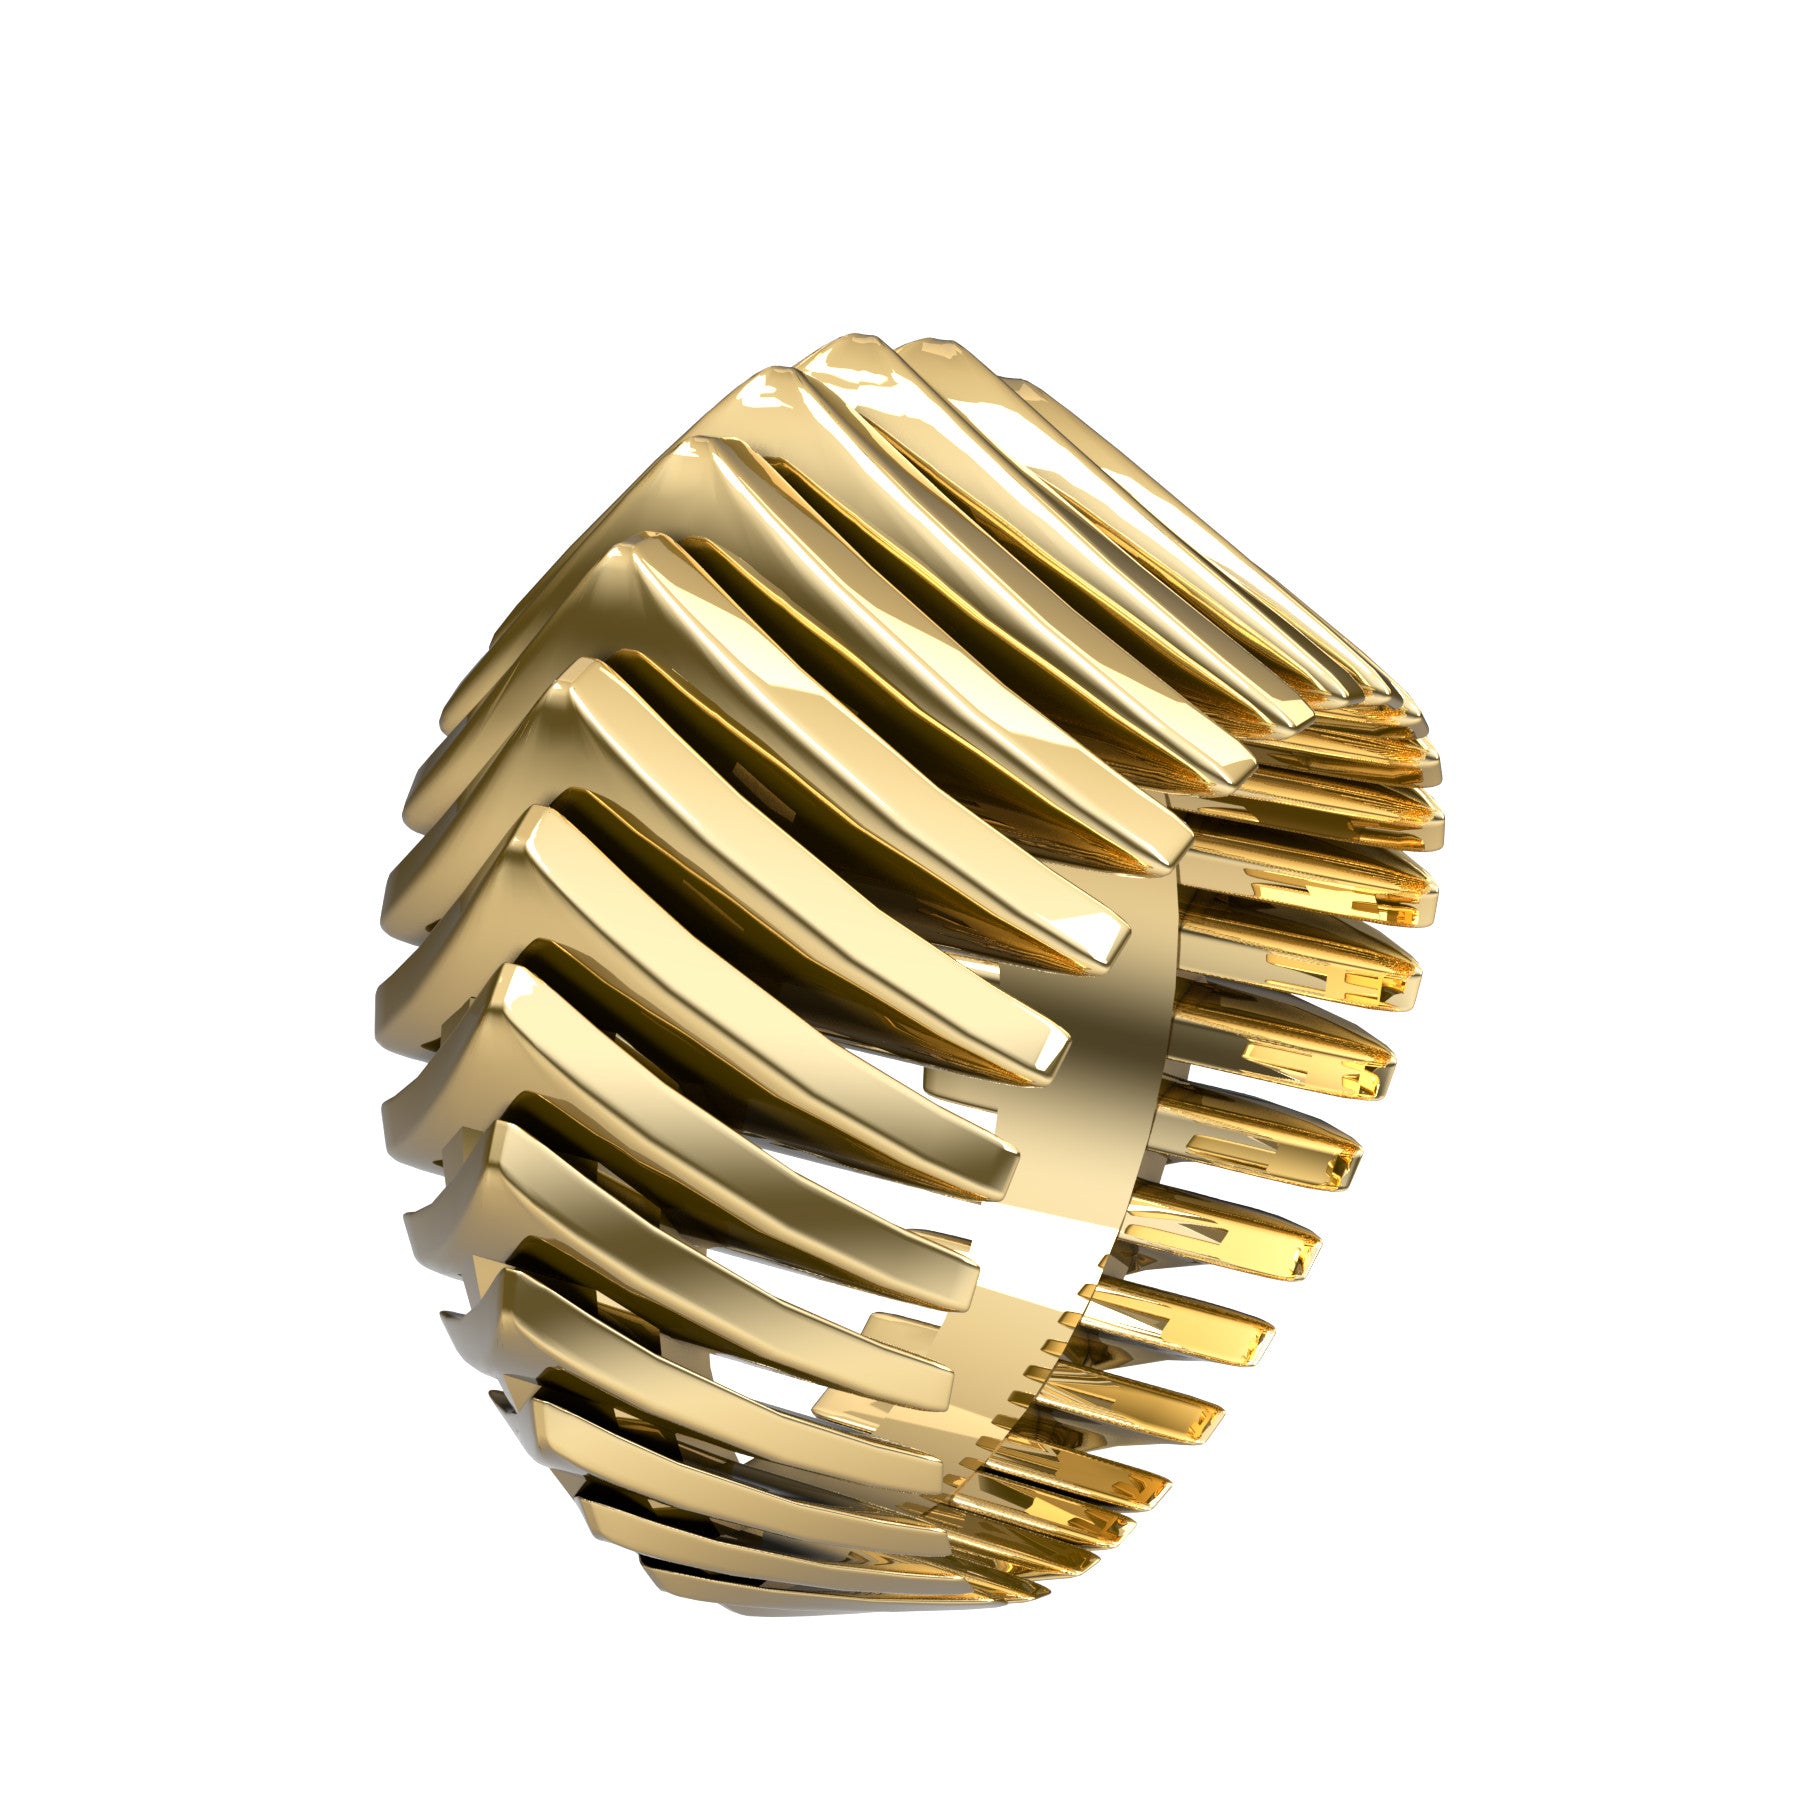 mekkano ring, 18 K yellow gold, weight about 14,5 g. (0.51 oz), width 15,6 mm max